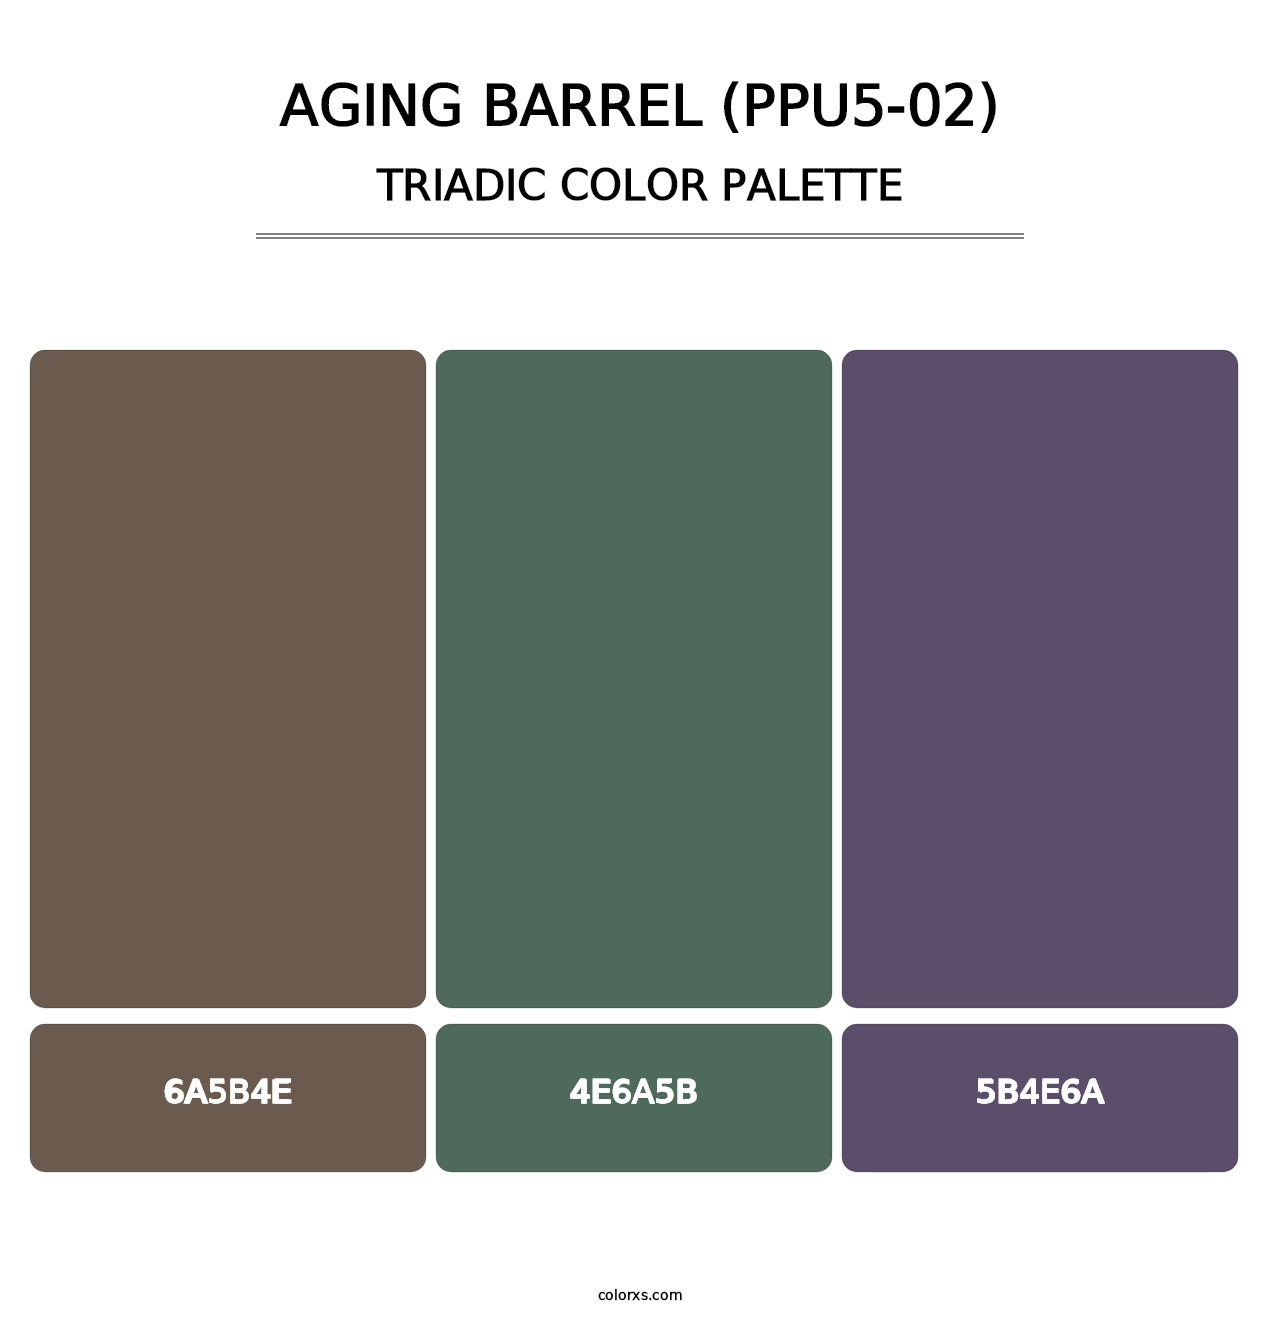 Aging Barrel (PPU5-02) - Triadic Color Palette